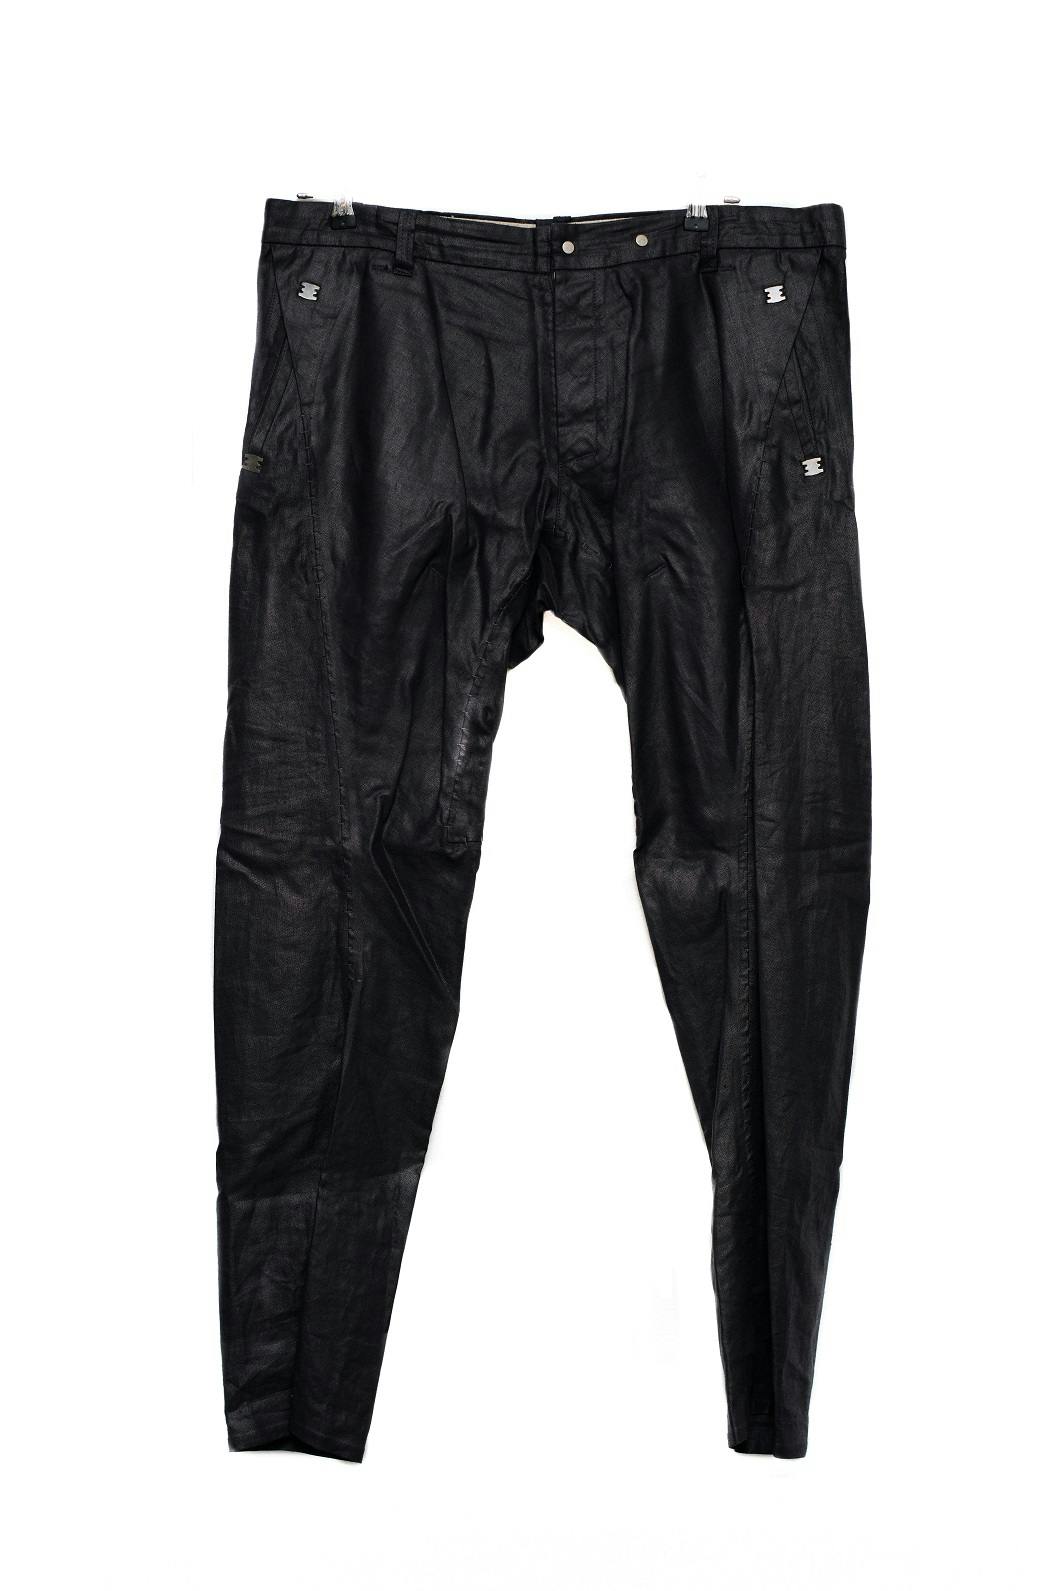 Isaac Sellam Experience Black Garmet Dyed Pants Size 38 - 1